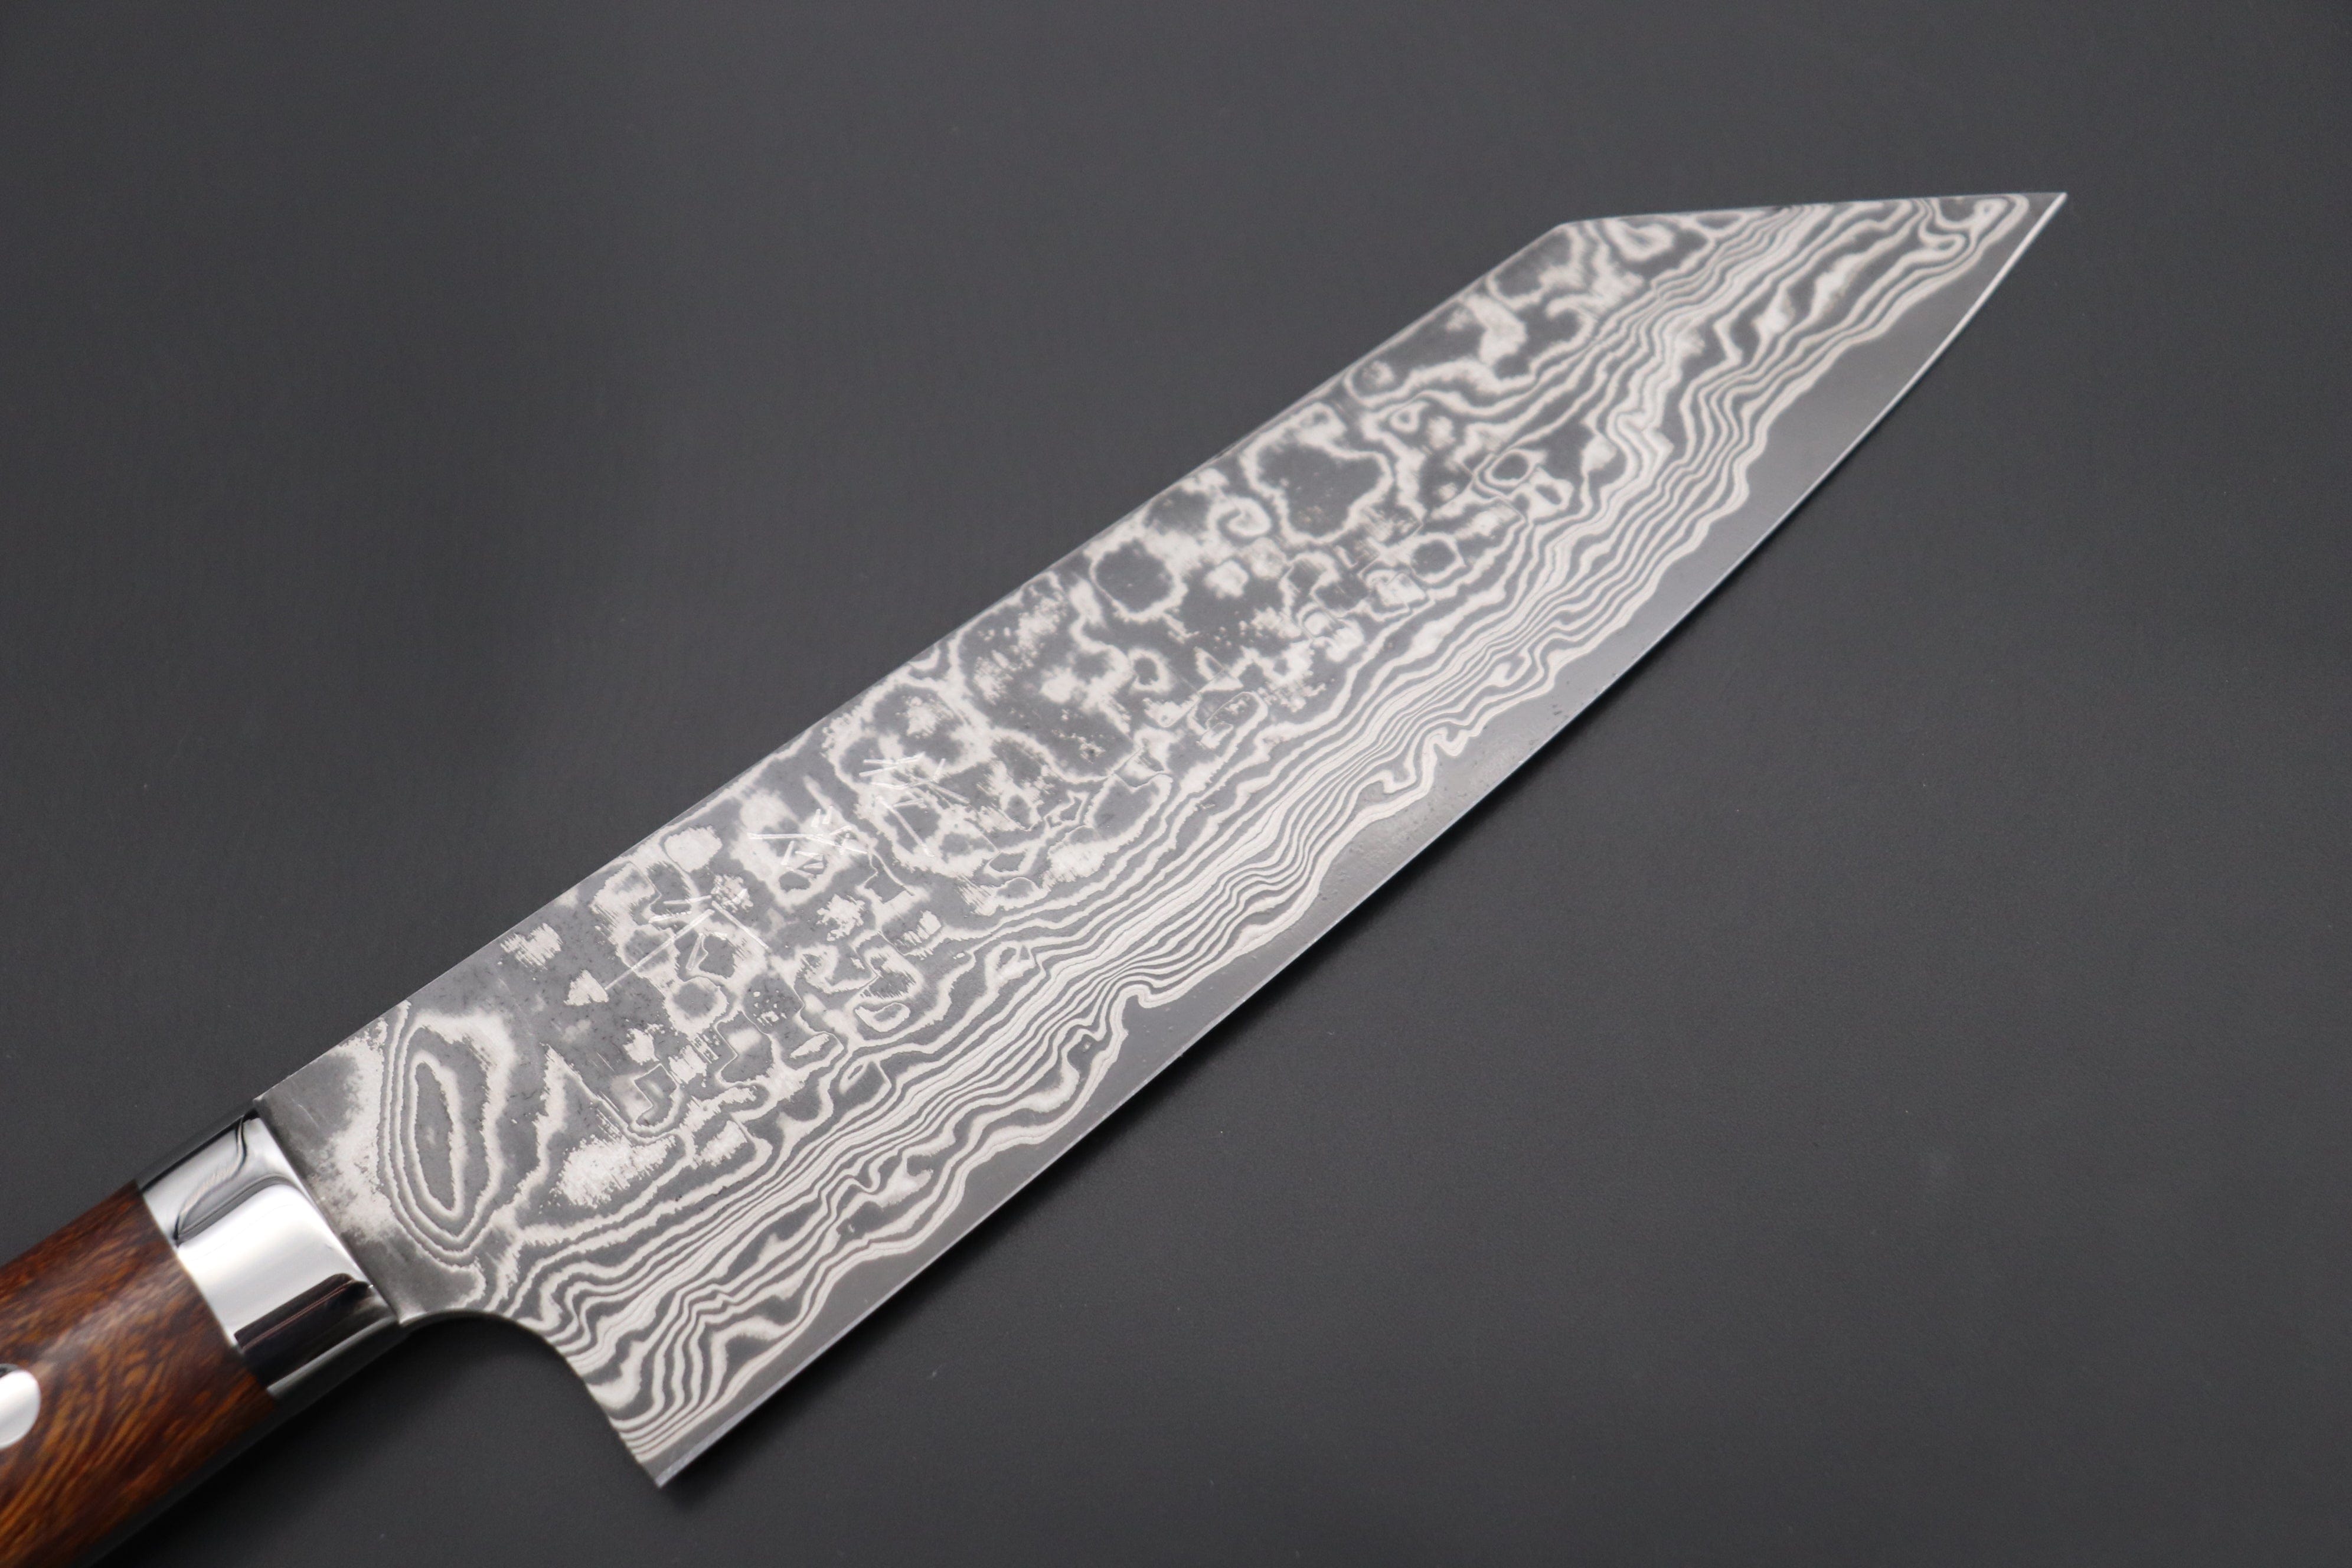 Japanese kitchen knife Takeshi Saji Bunka Iron Wood Nickel